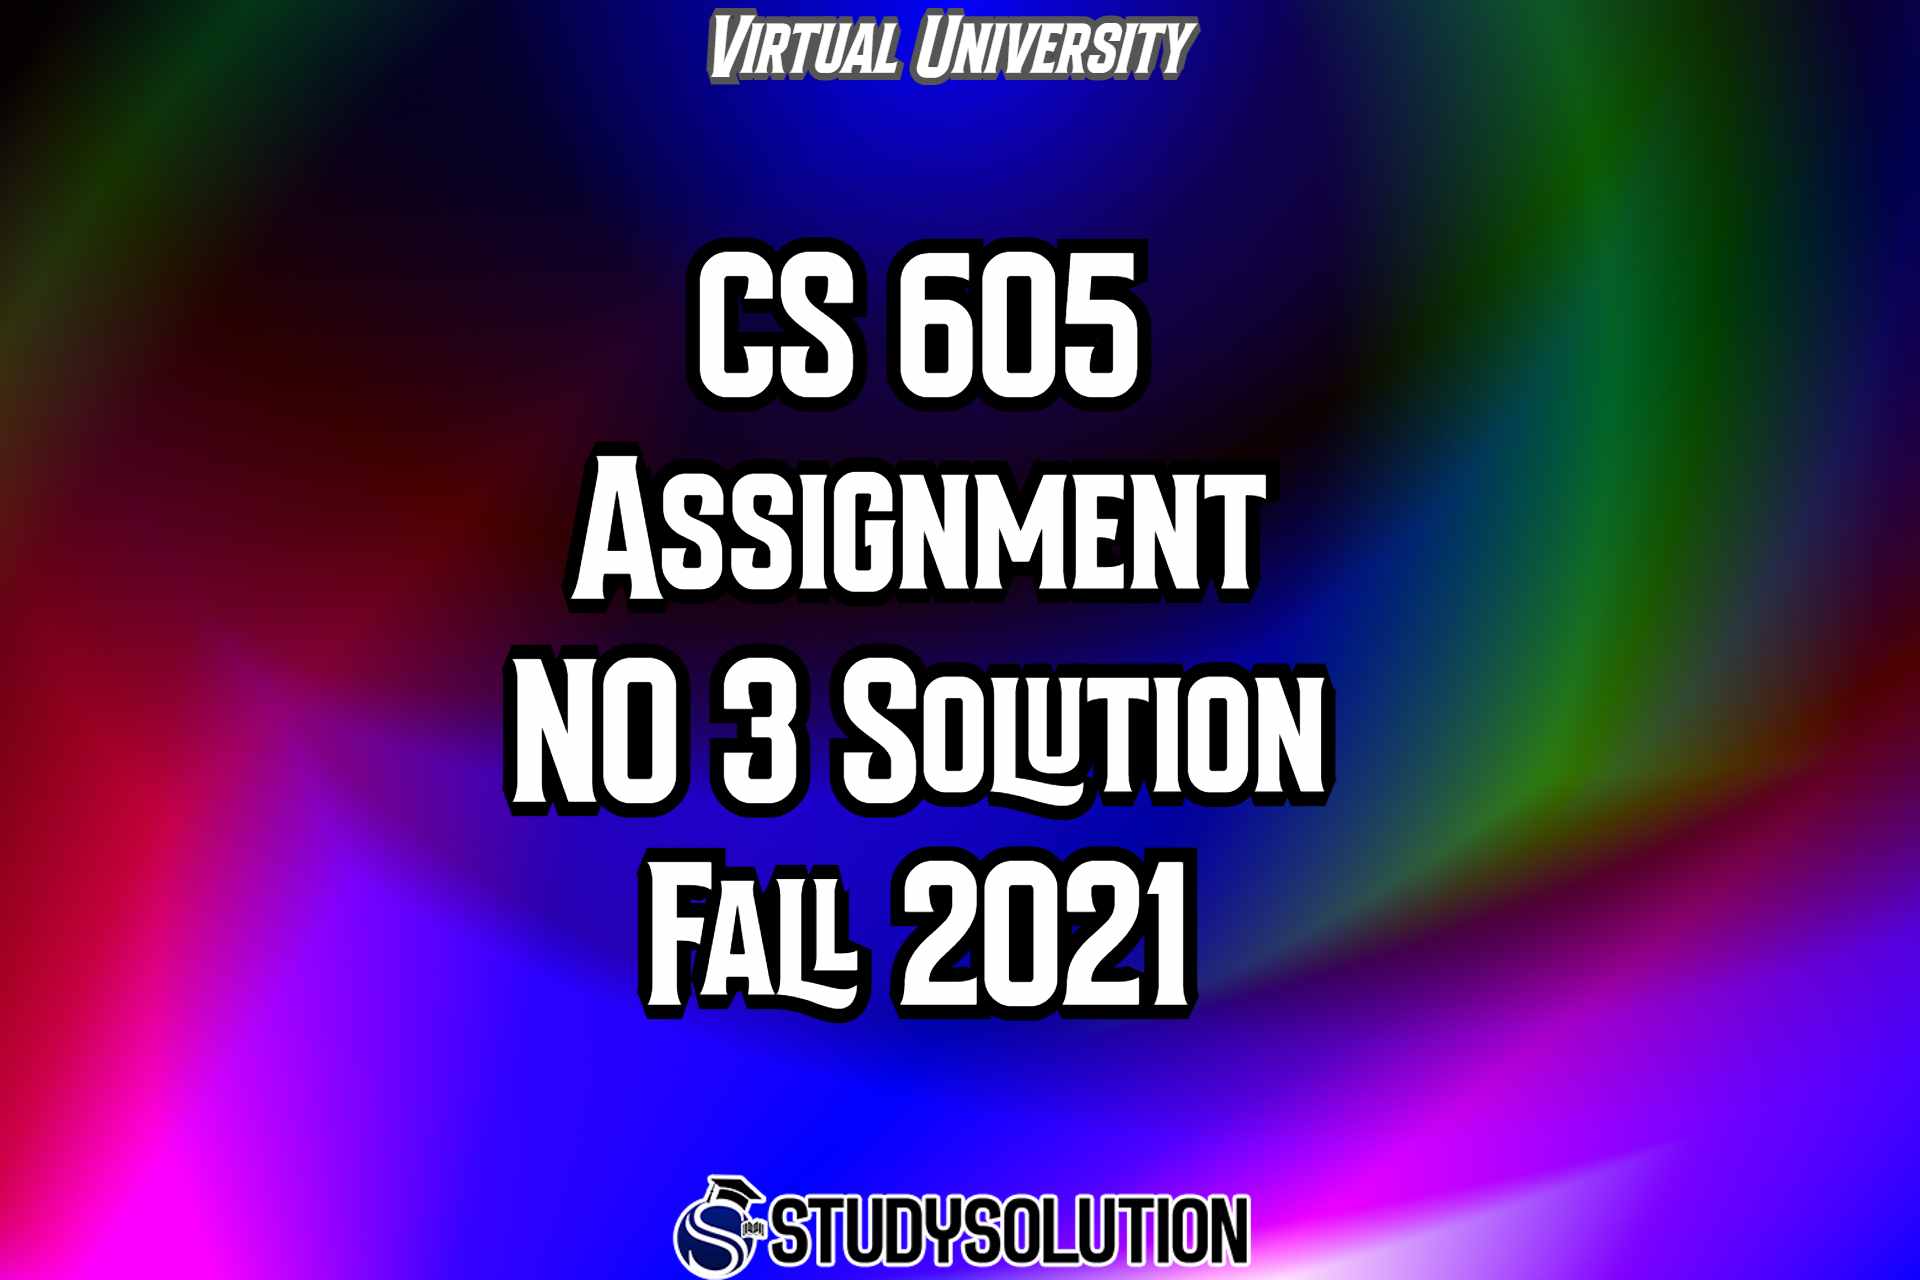 CS605 Assignment No 3 Solution Fall 2021